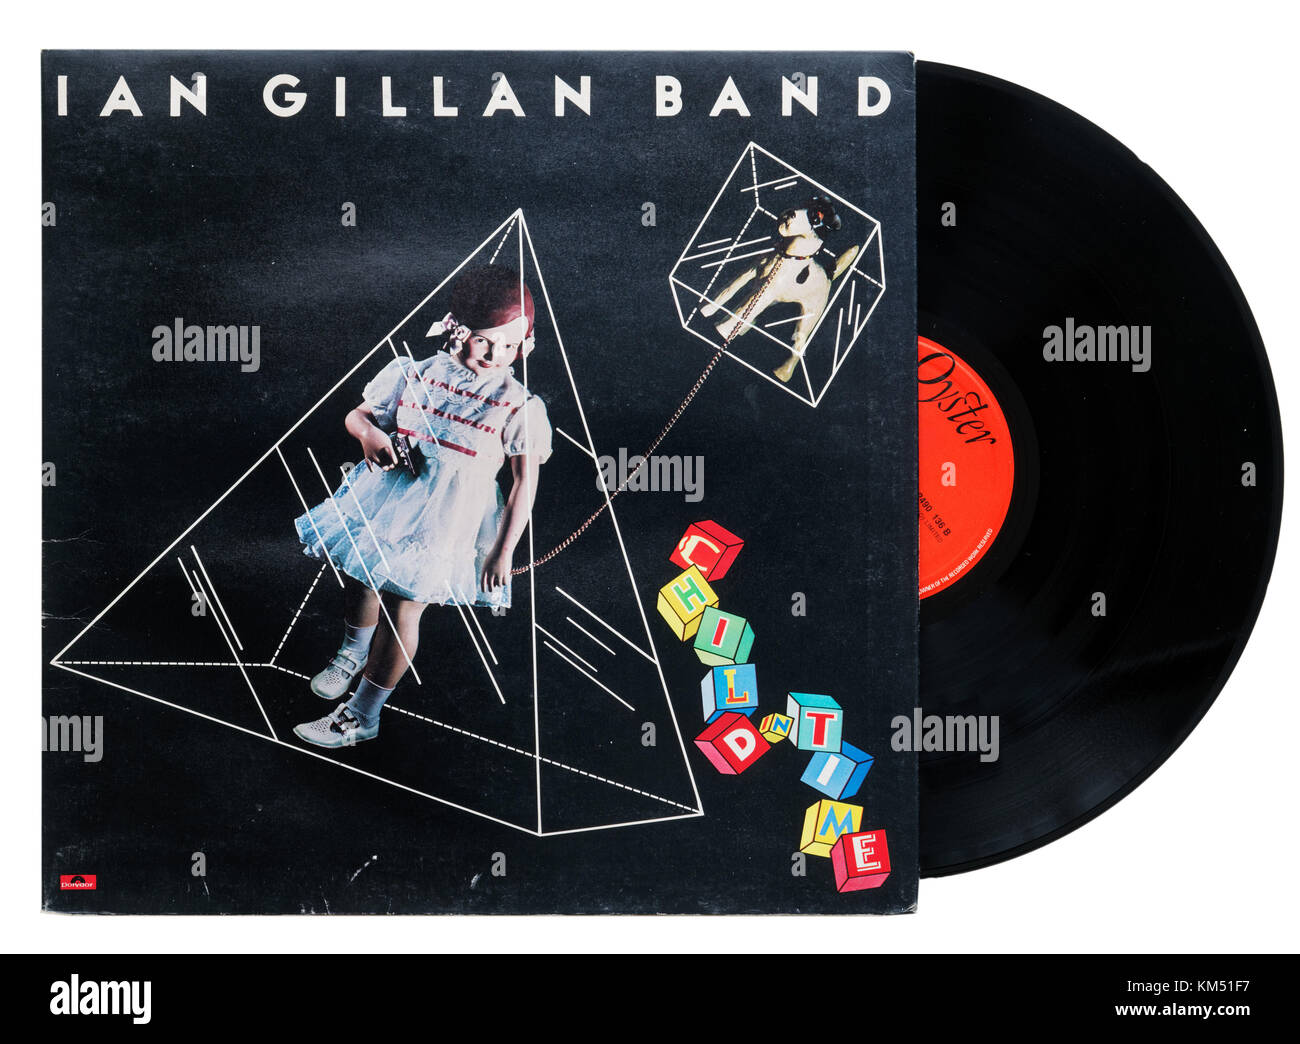 Ian Gillan Band Child in Time album Stockfoto